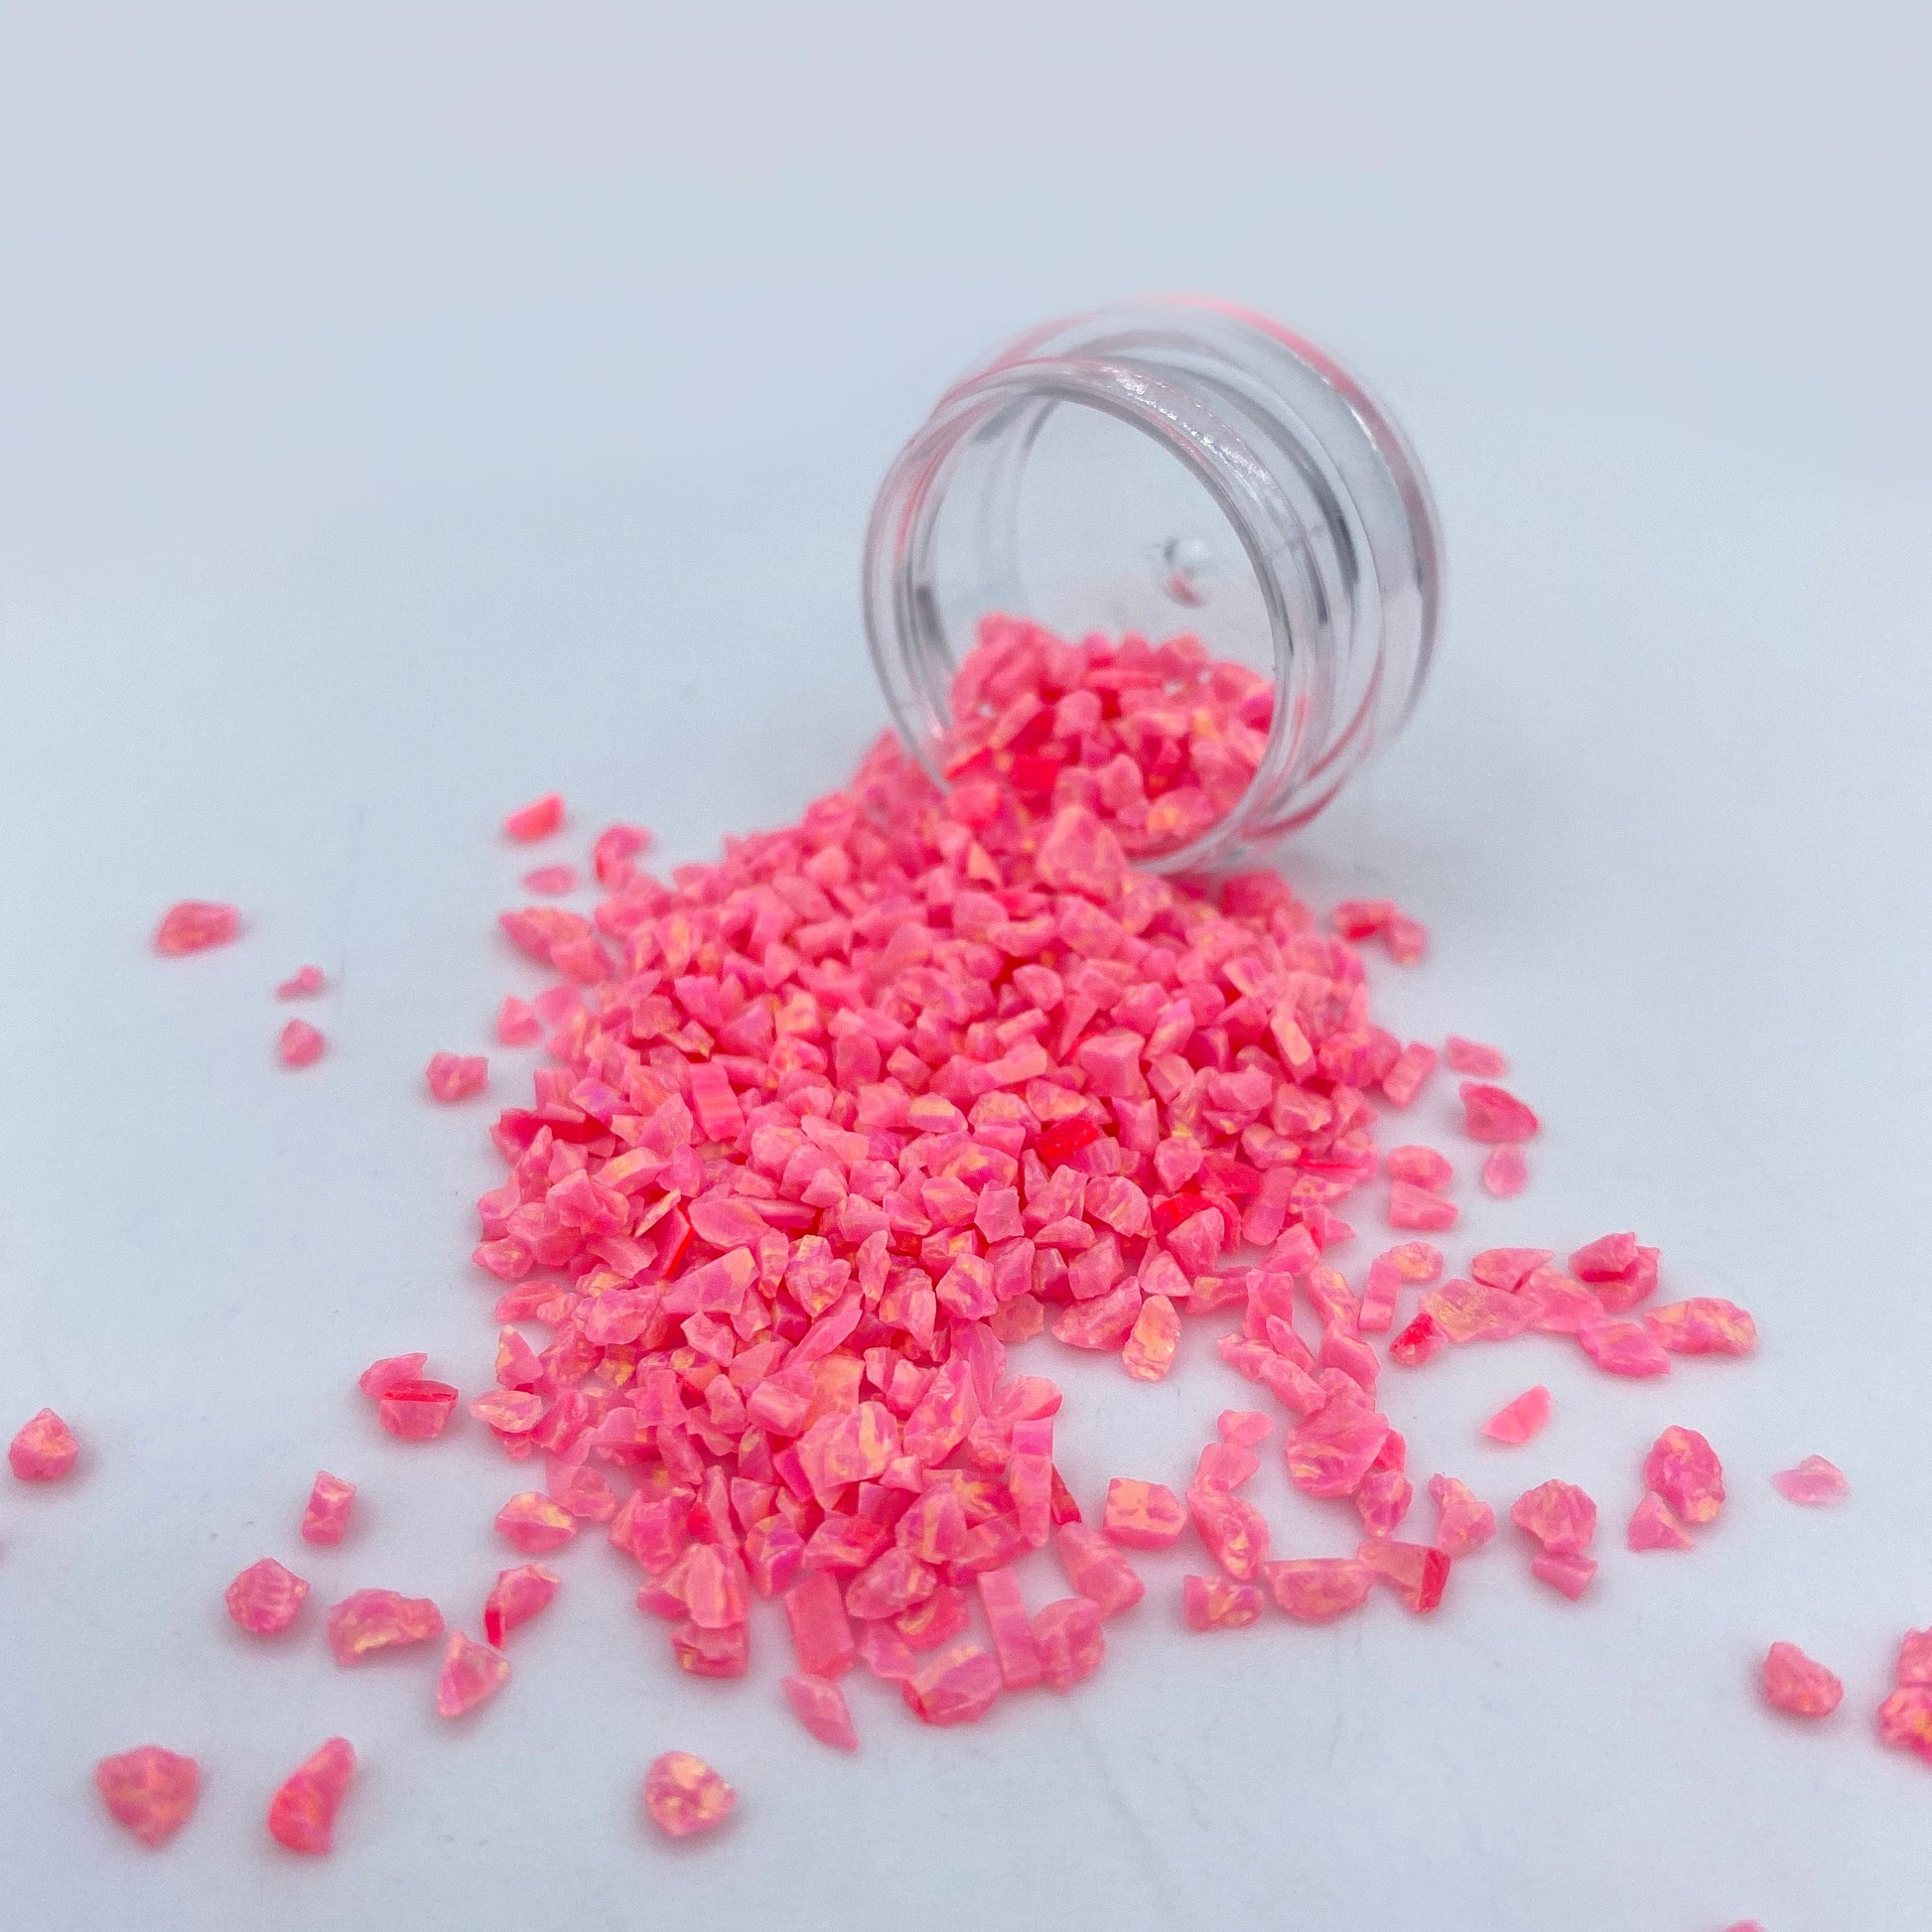 Opal - Bubble Gum Pink - Patrick Adair Supplies